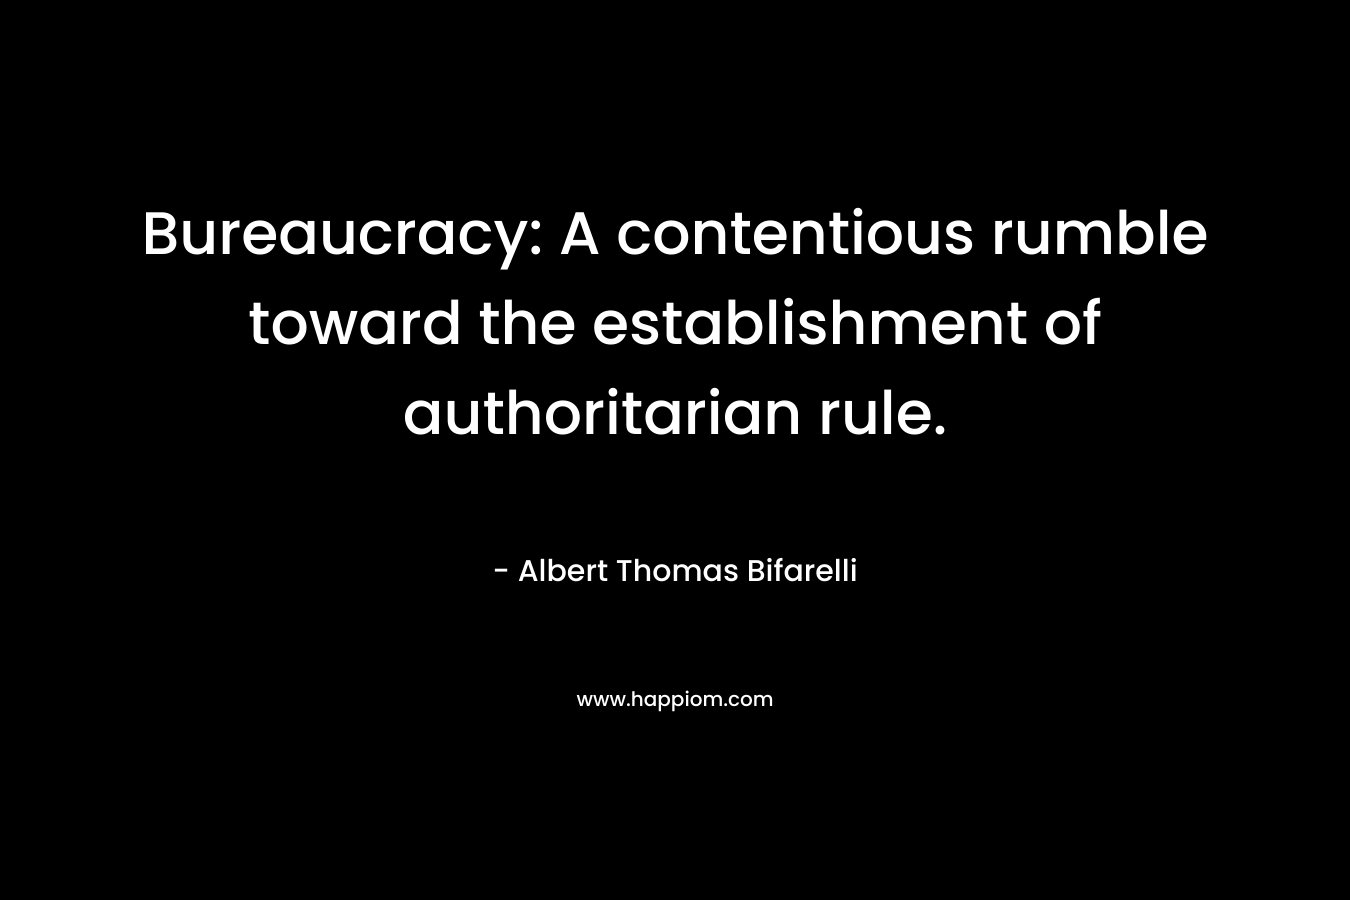 Bureaucracy: A contentious rumble toward the establishment of authoritarian rule.